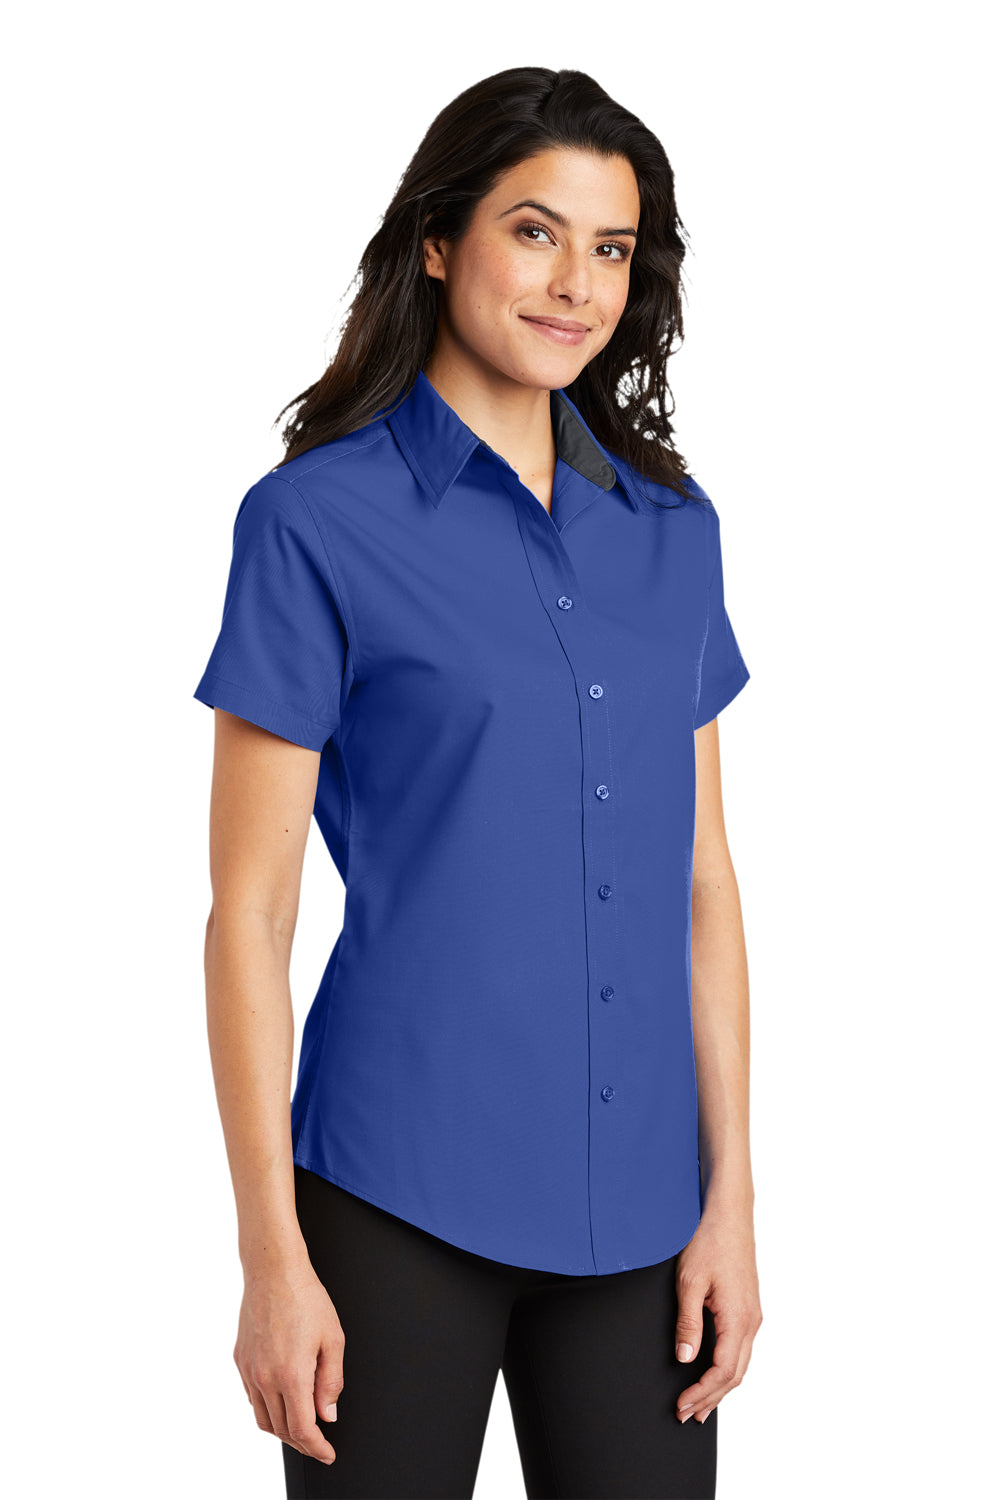 Nautica Short Sleeve Button Down Shirt - Medium, Large - Navy Blue